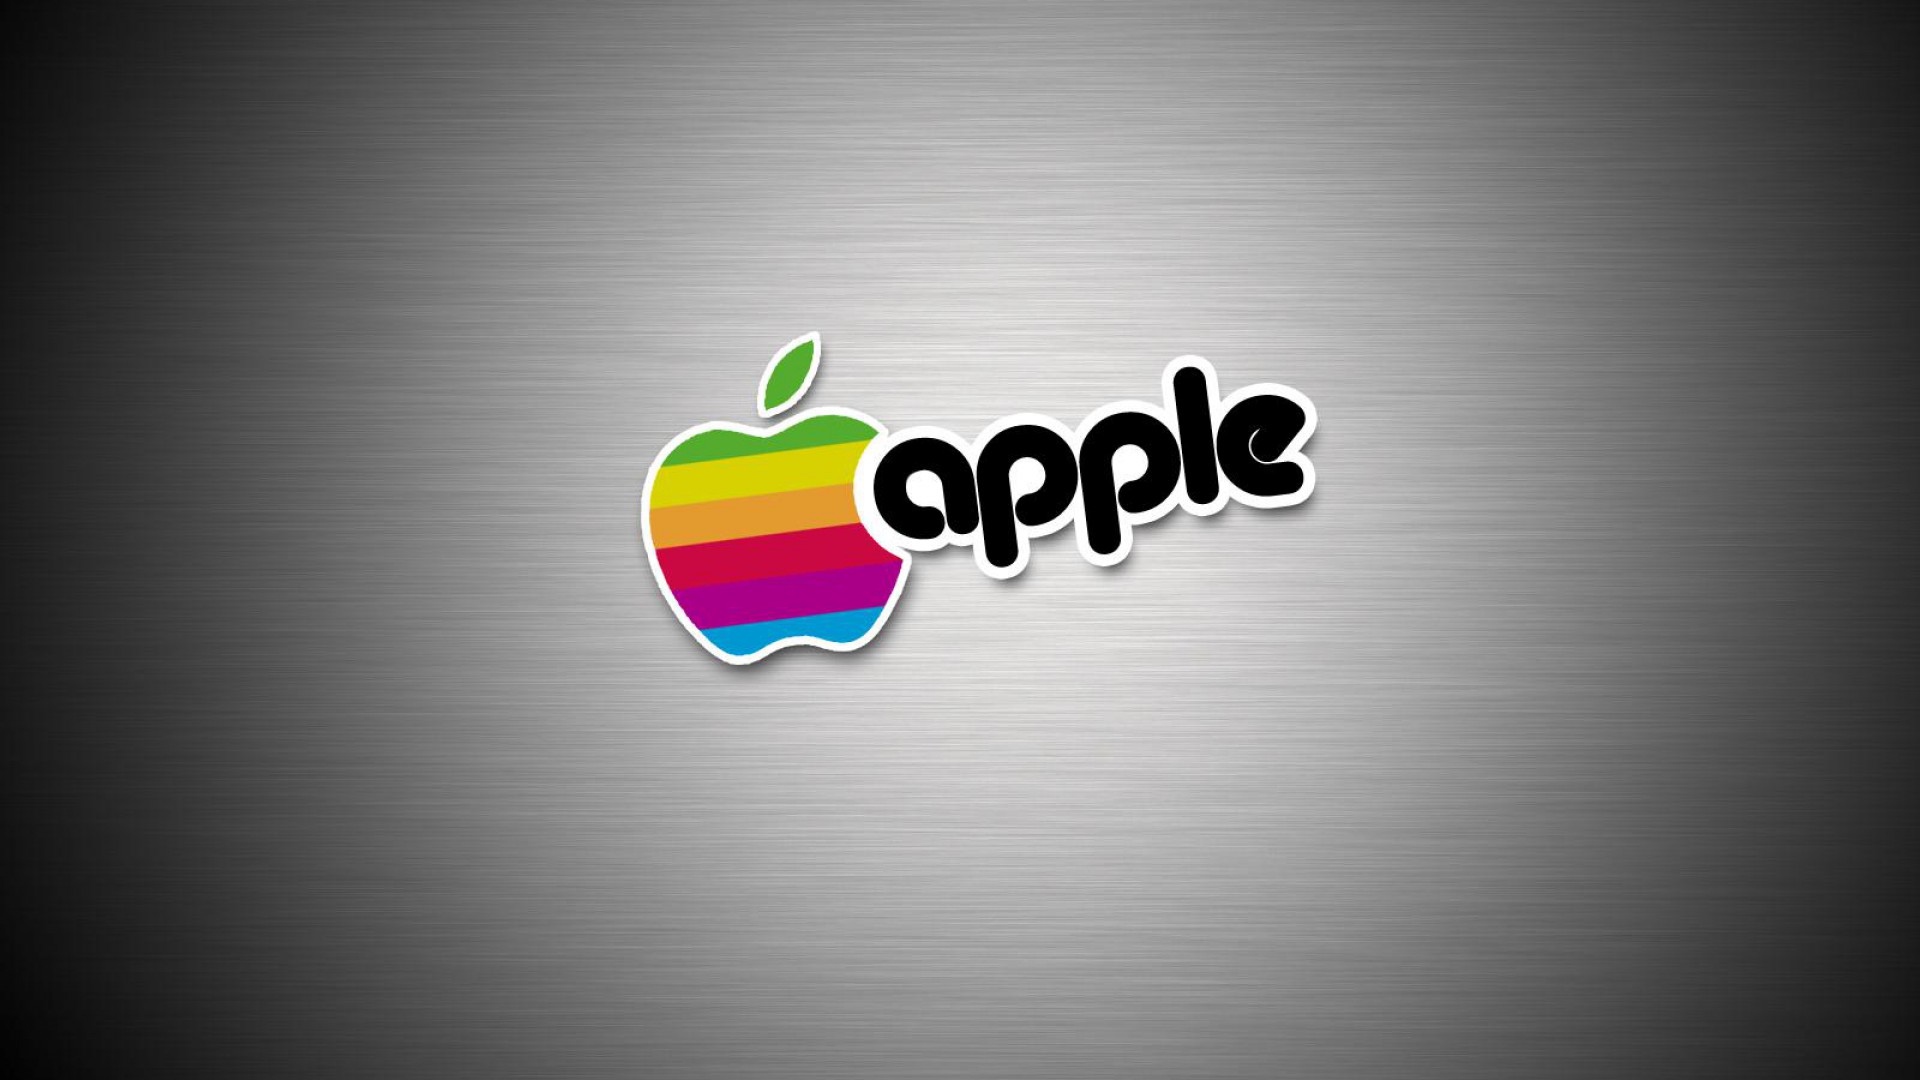 Apple Logo Wallpapers Hd - Apple Name Images Hd - HD Wallpaper 